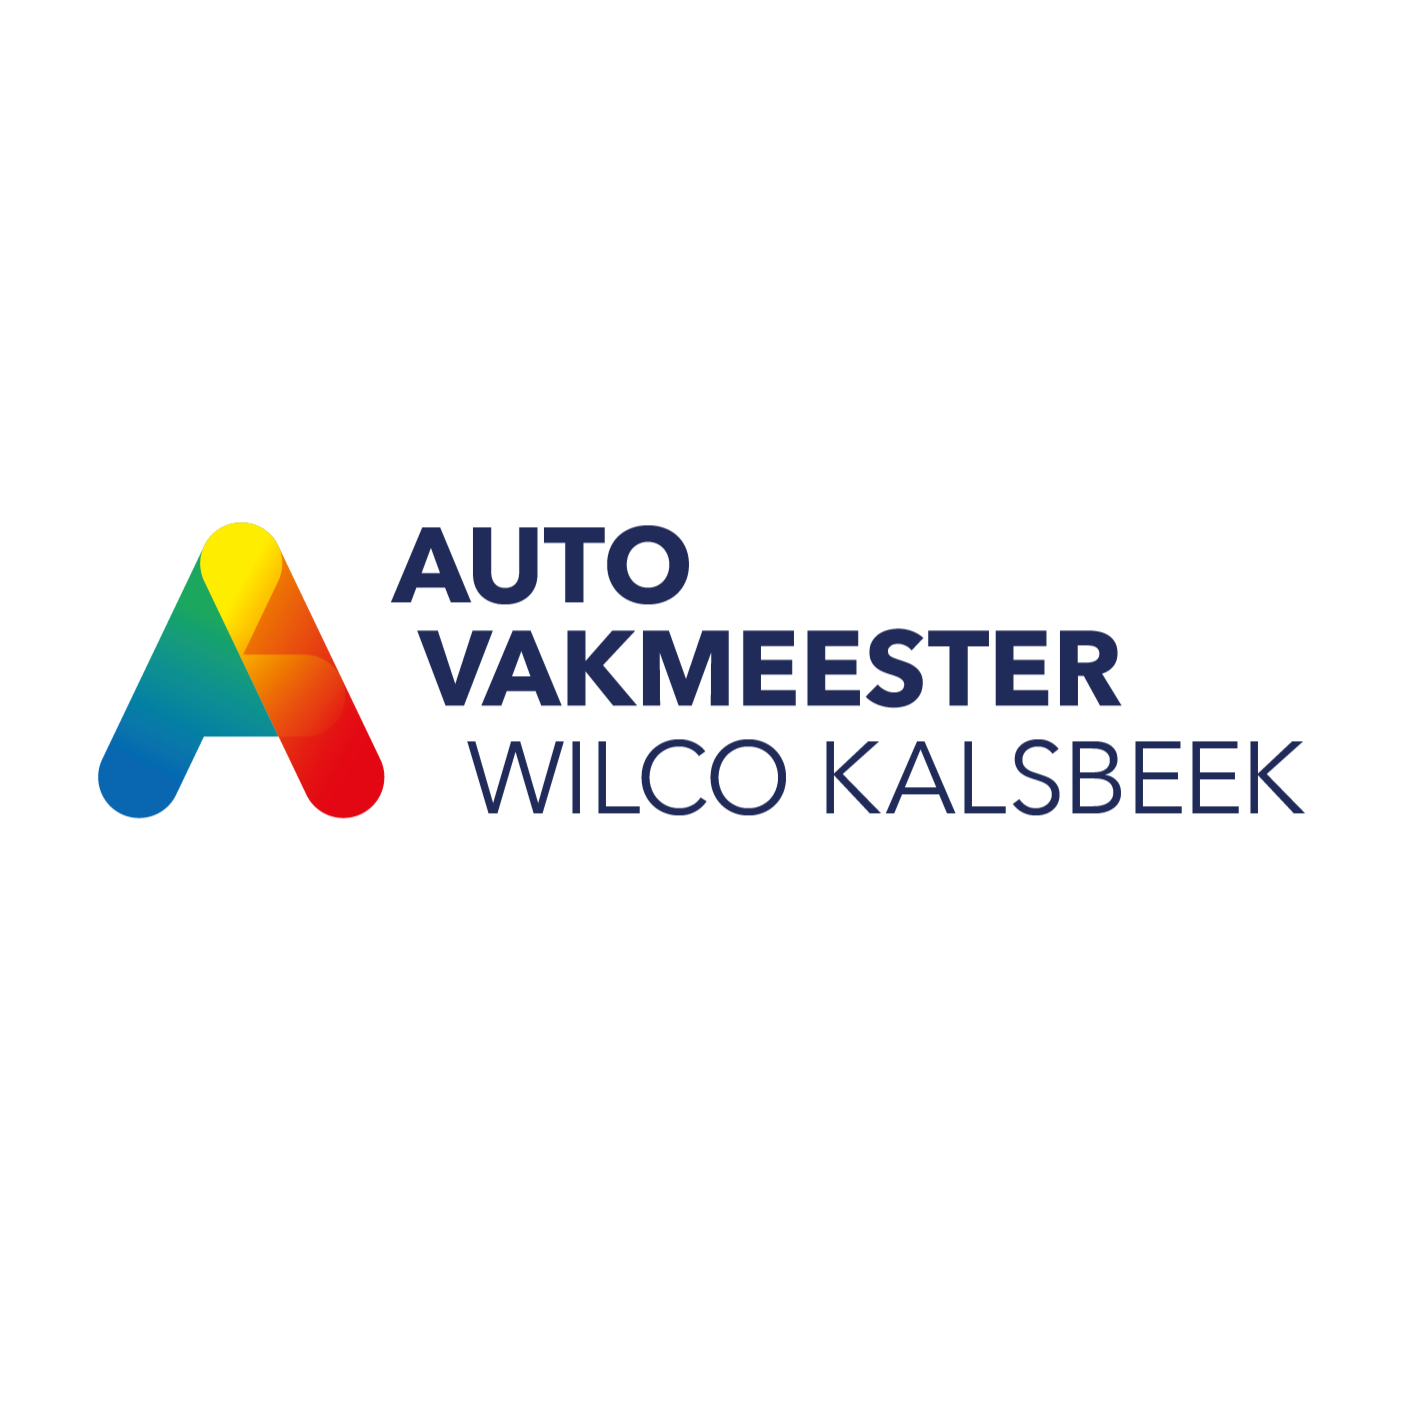 Autovakmeester Wilco Kalsbeek Logo